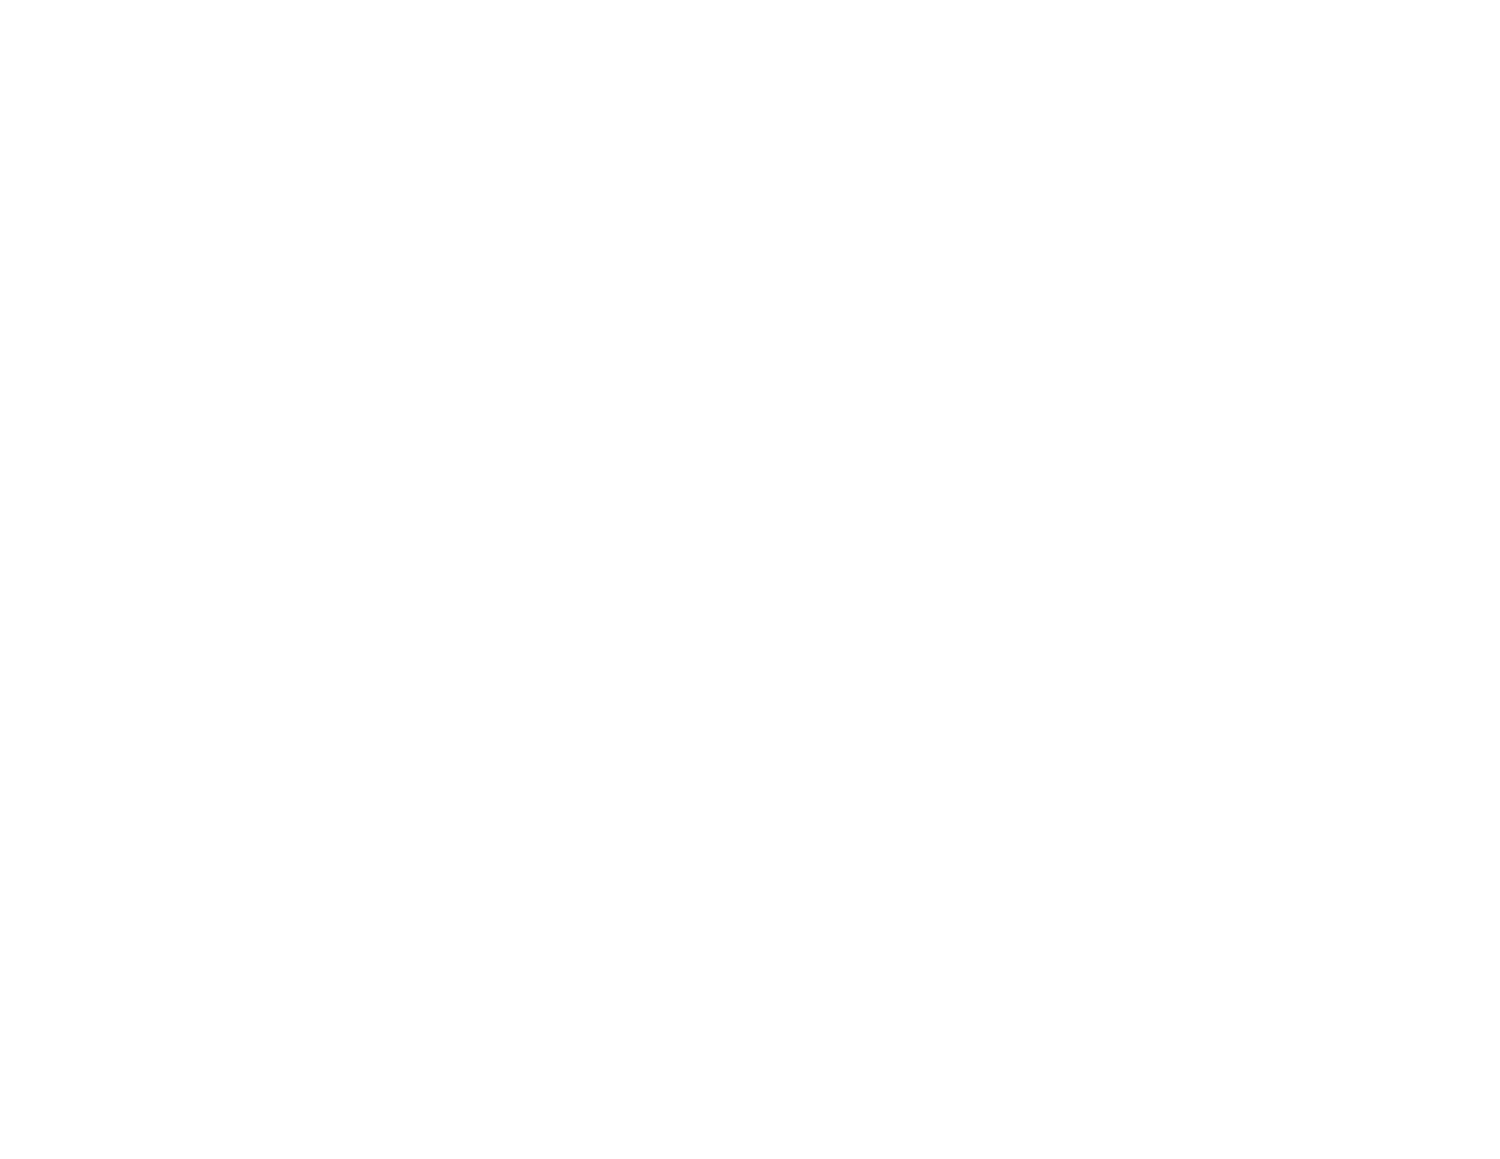 LNB Studio